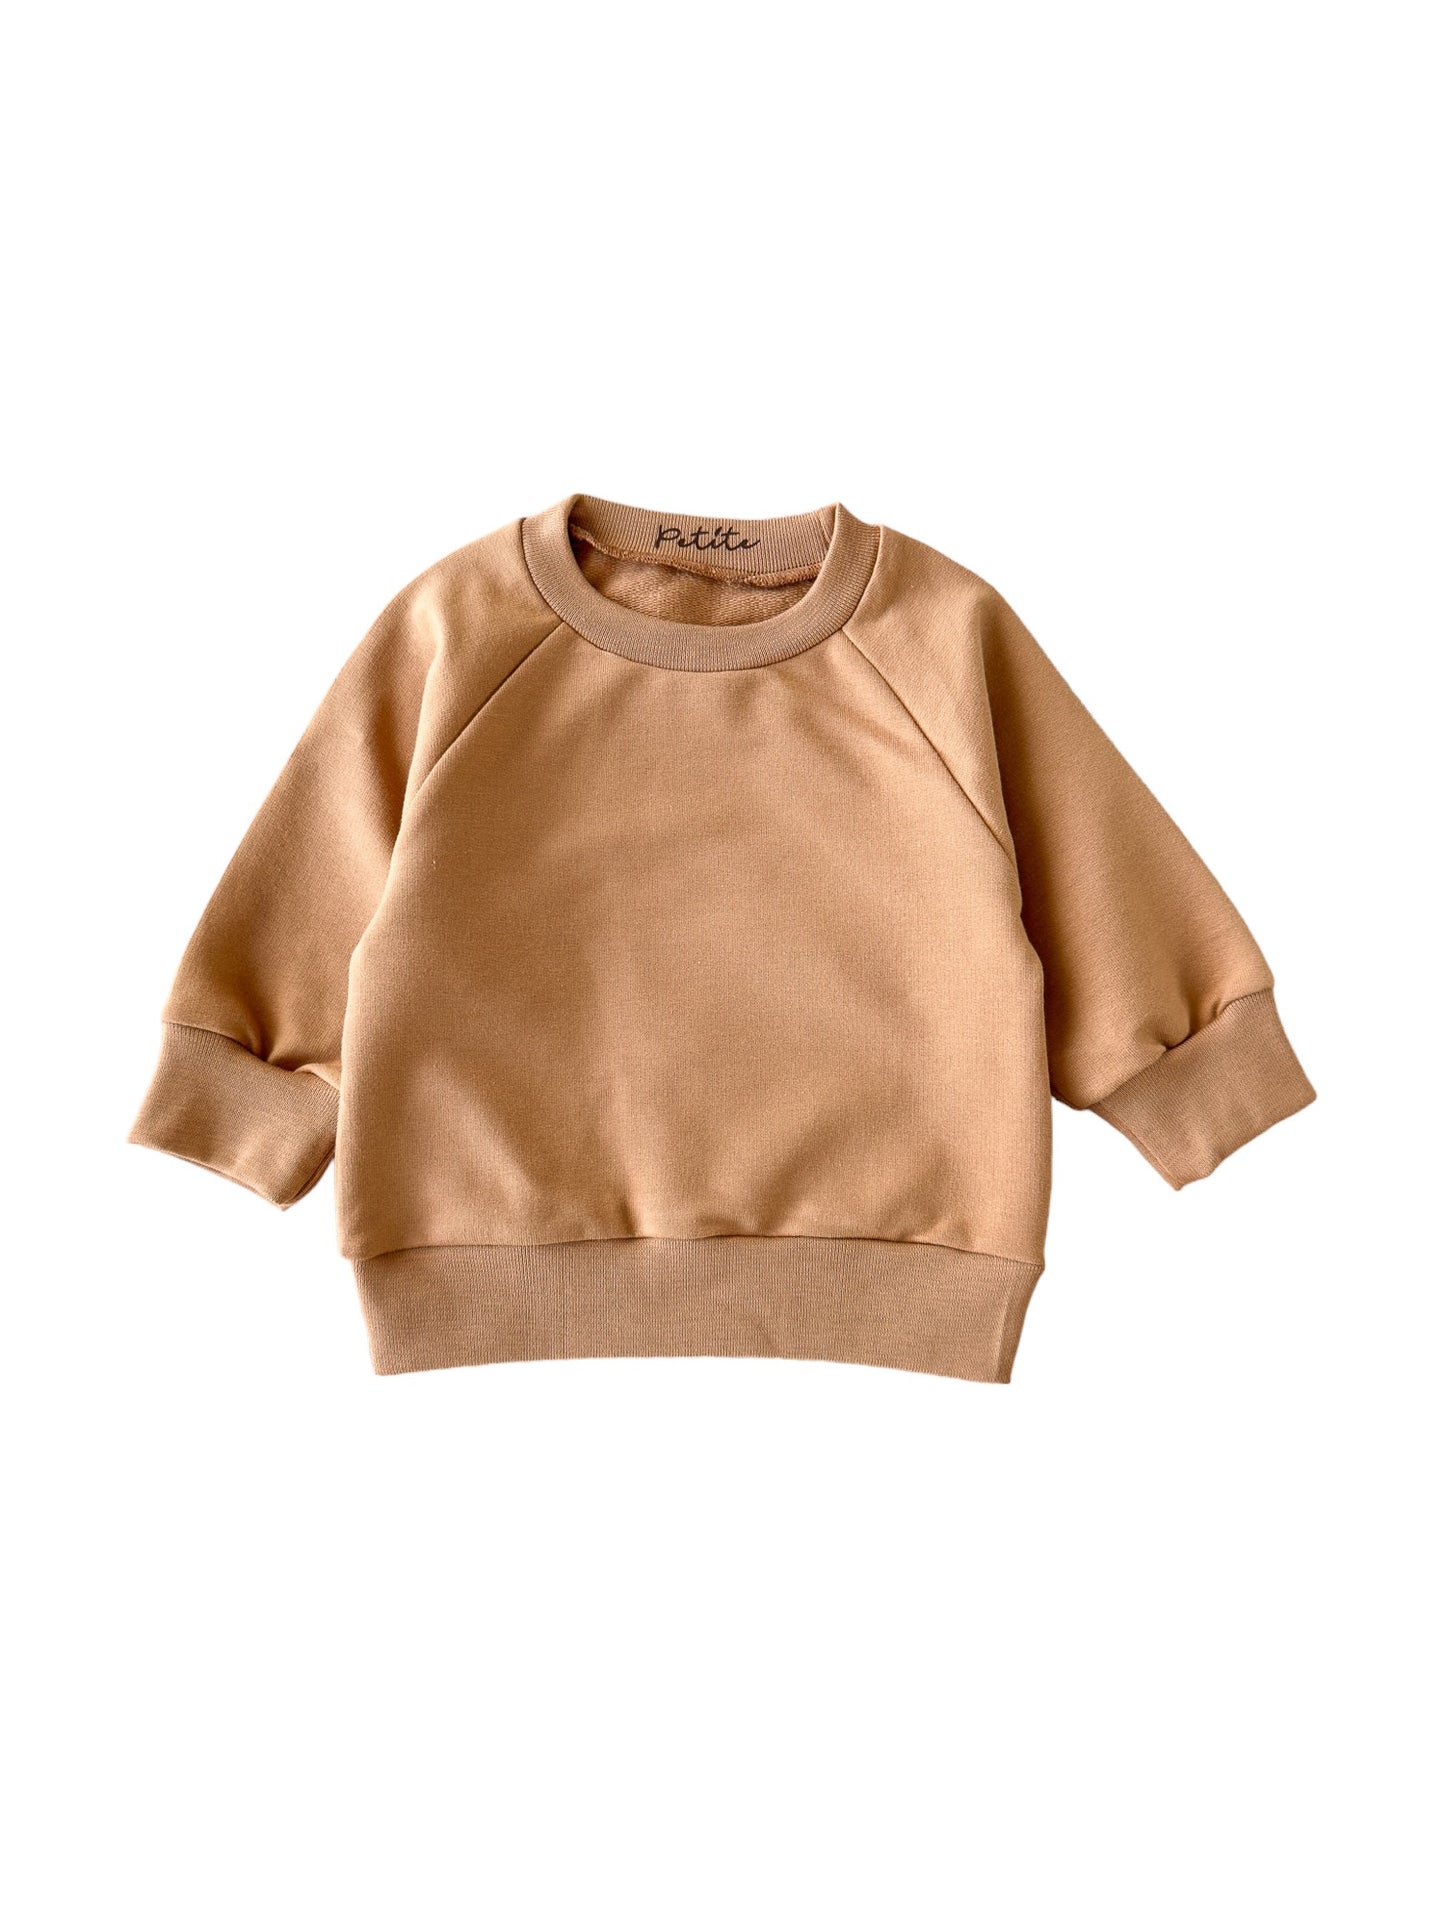 Cotton sweater / cinnamon